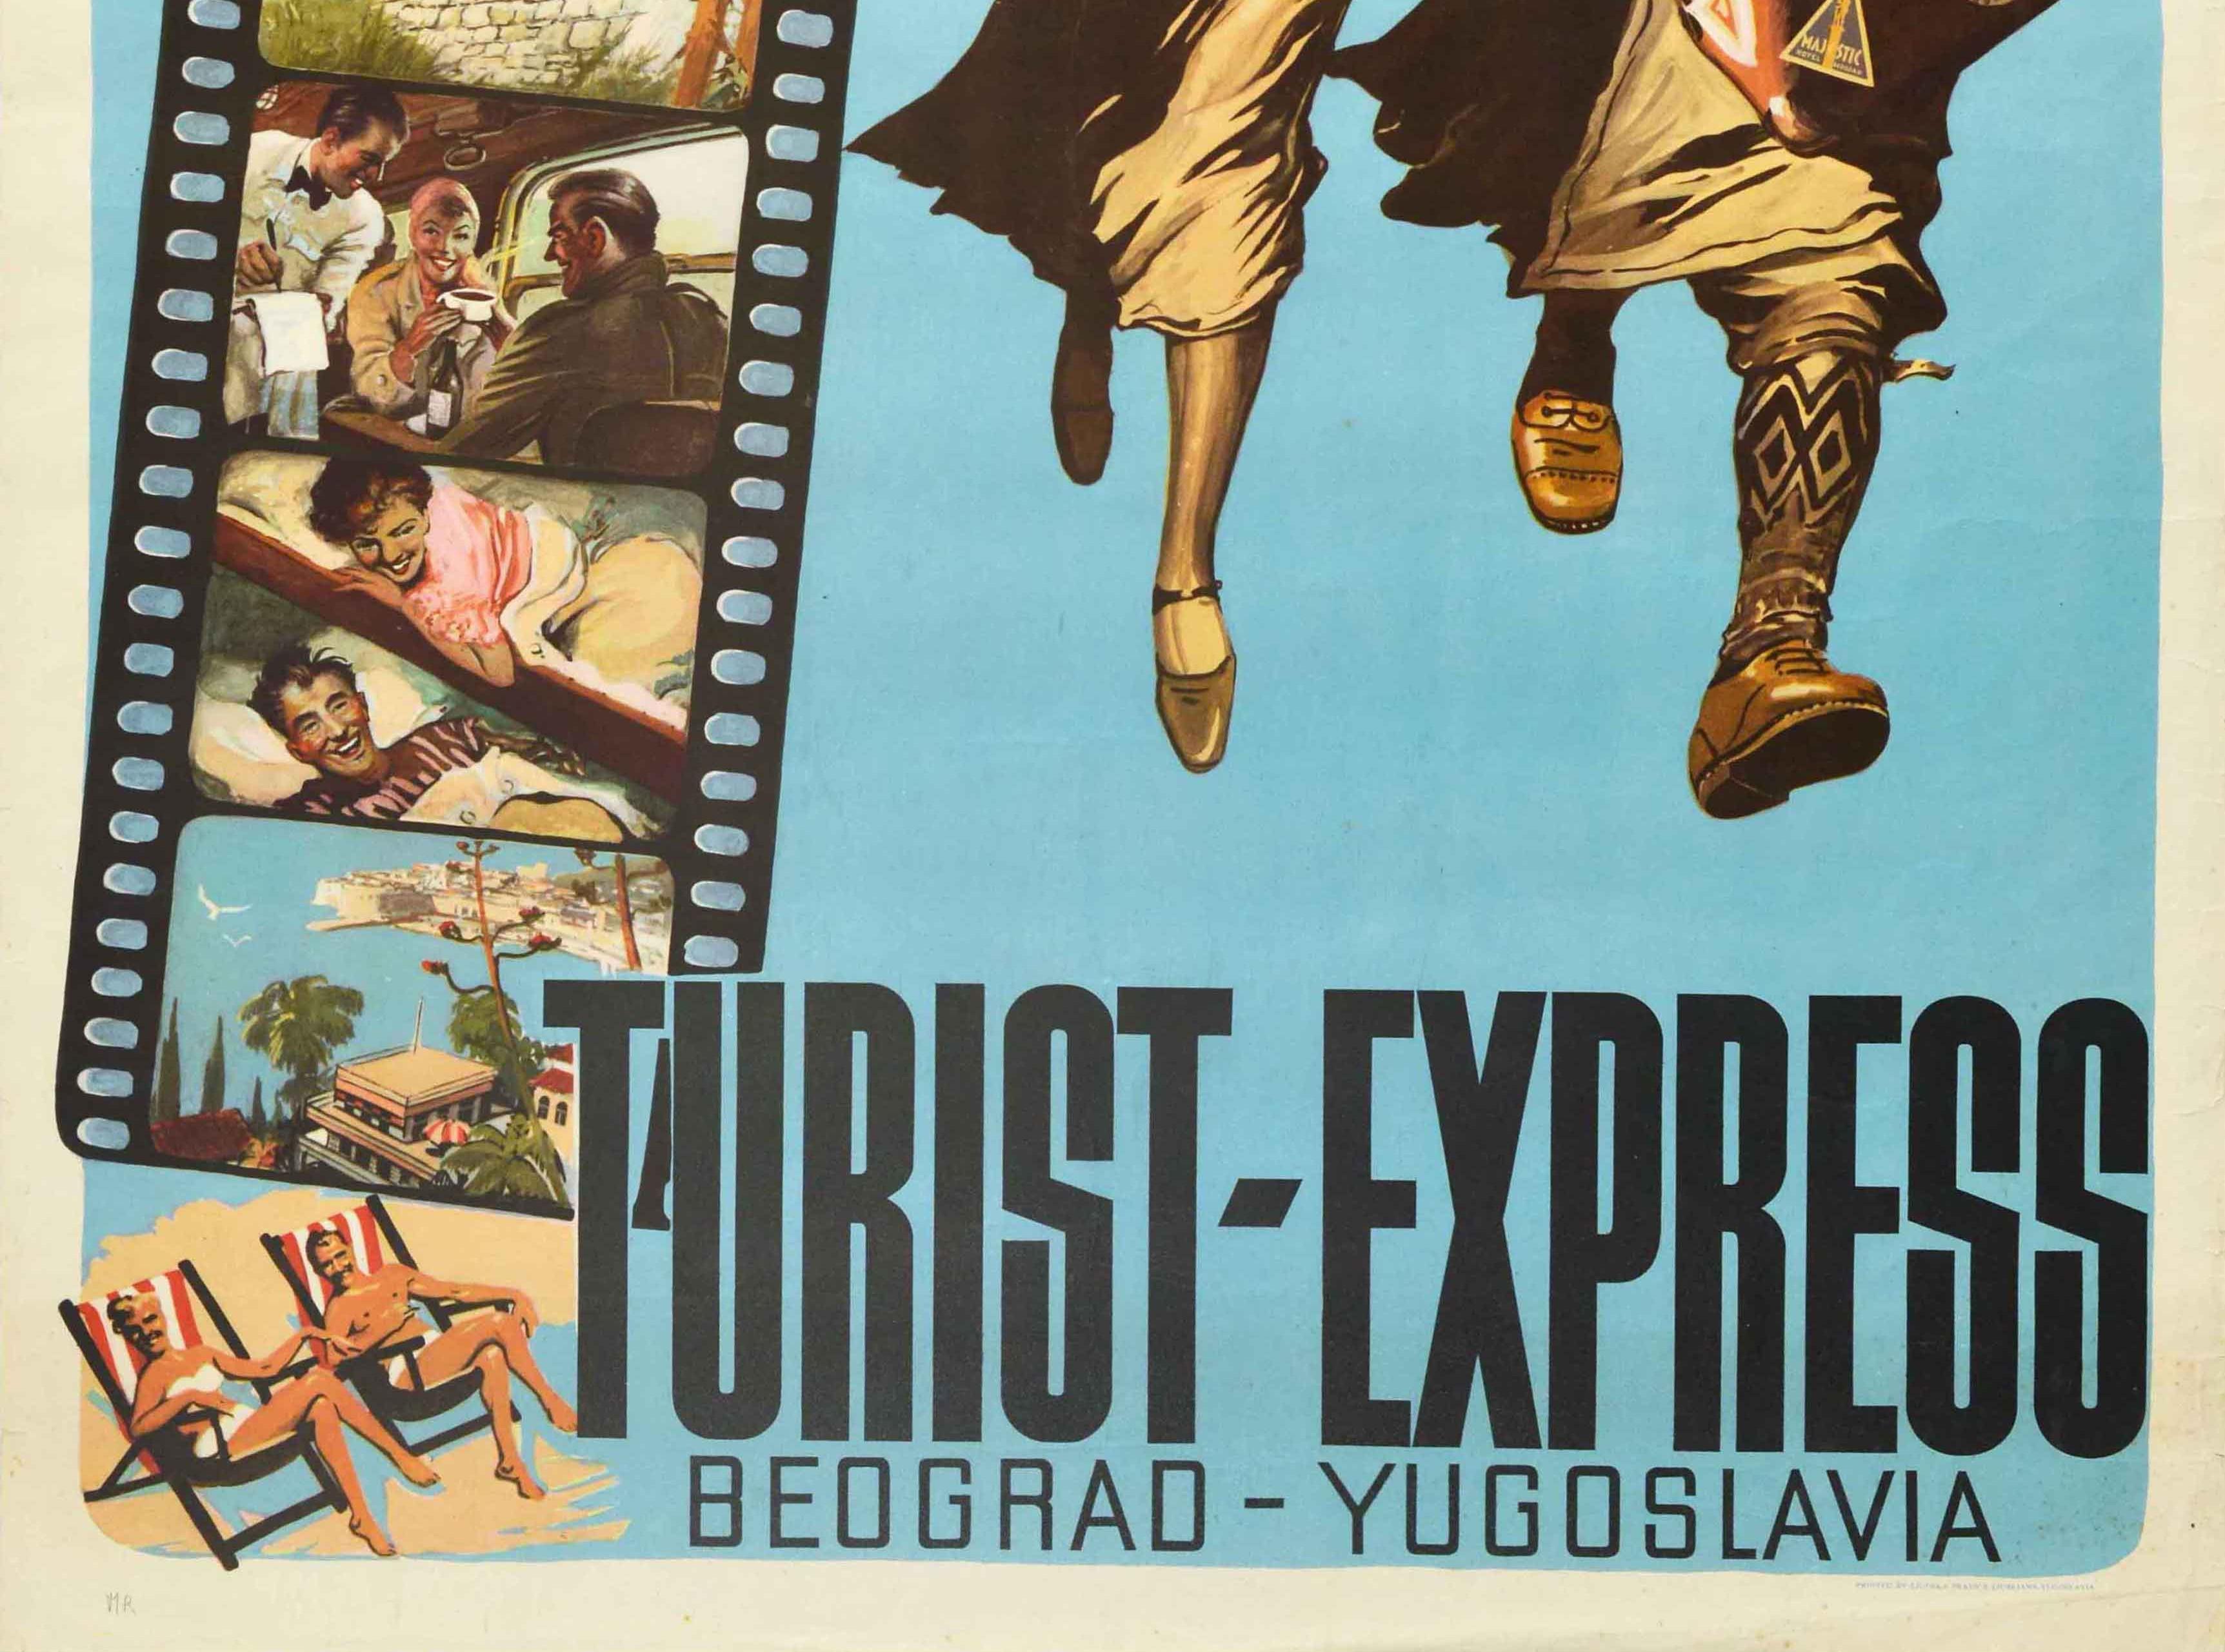 yugoslavia posters